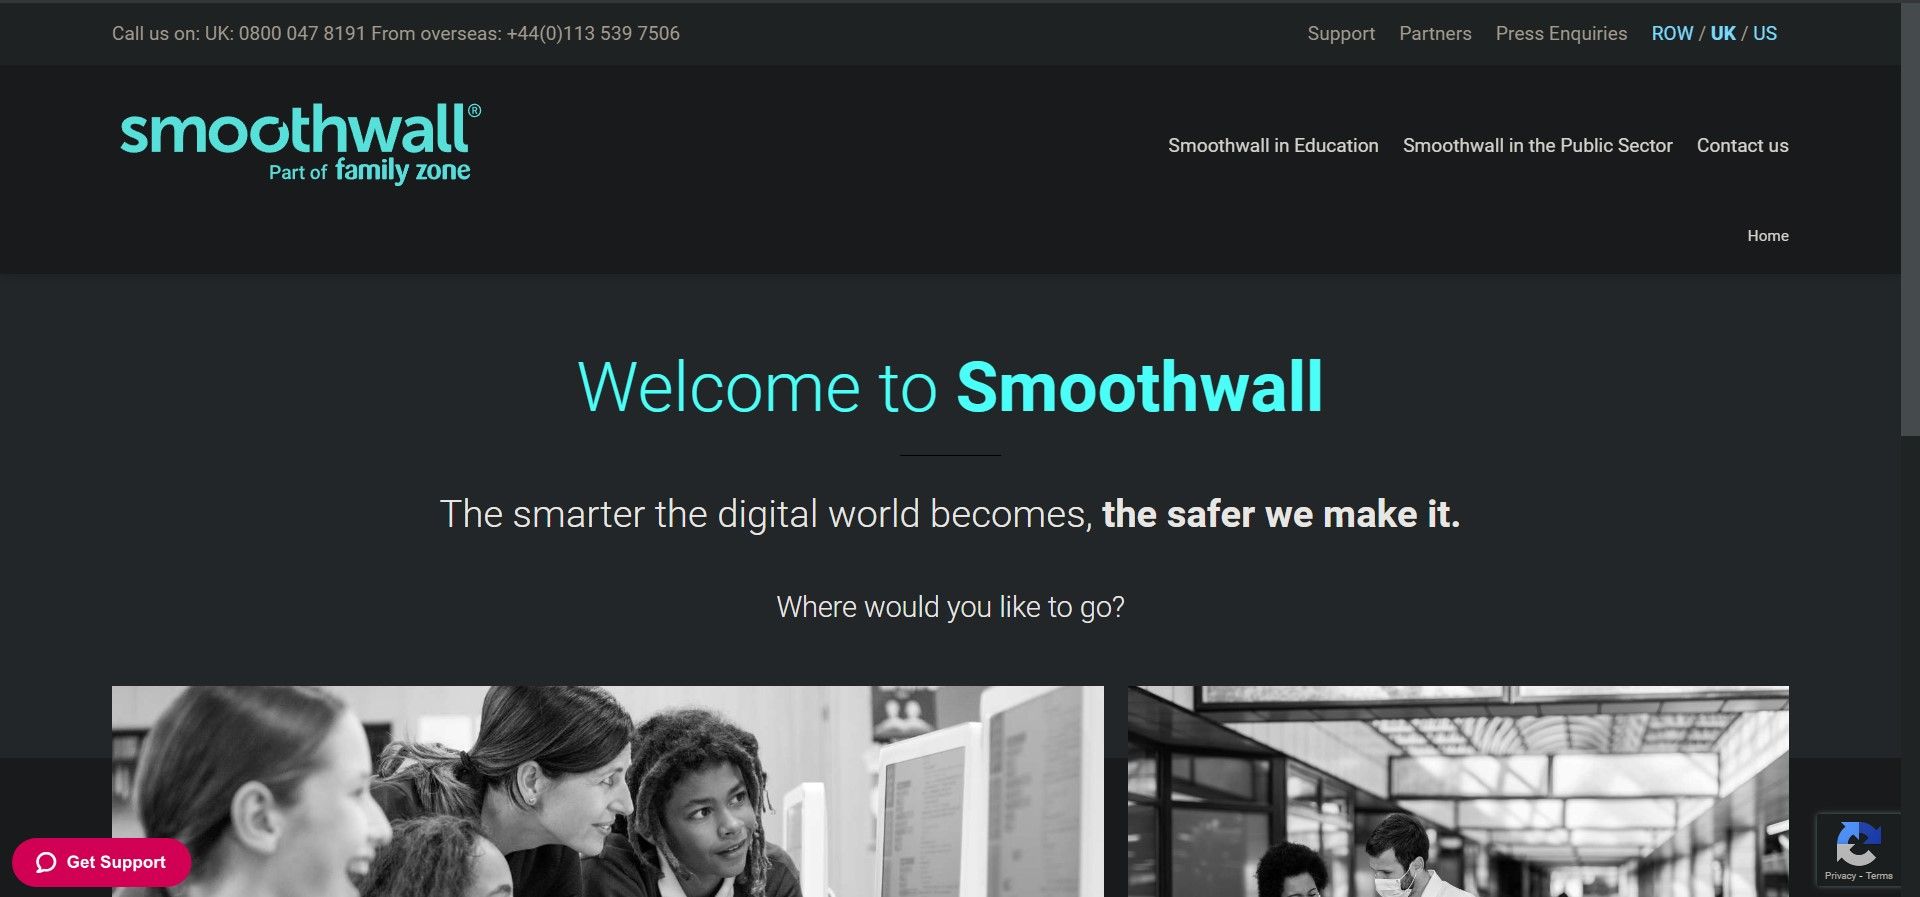 smoothwall website homepage